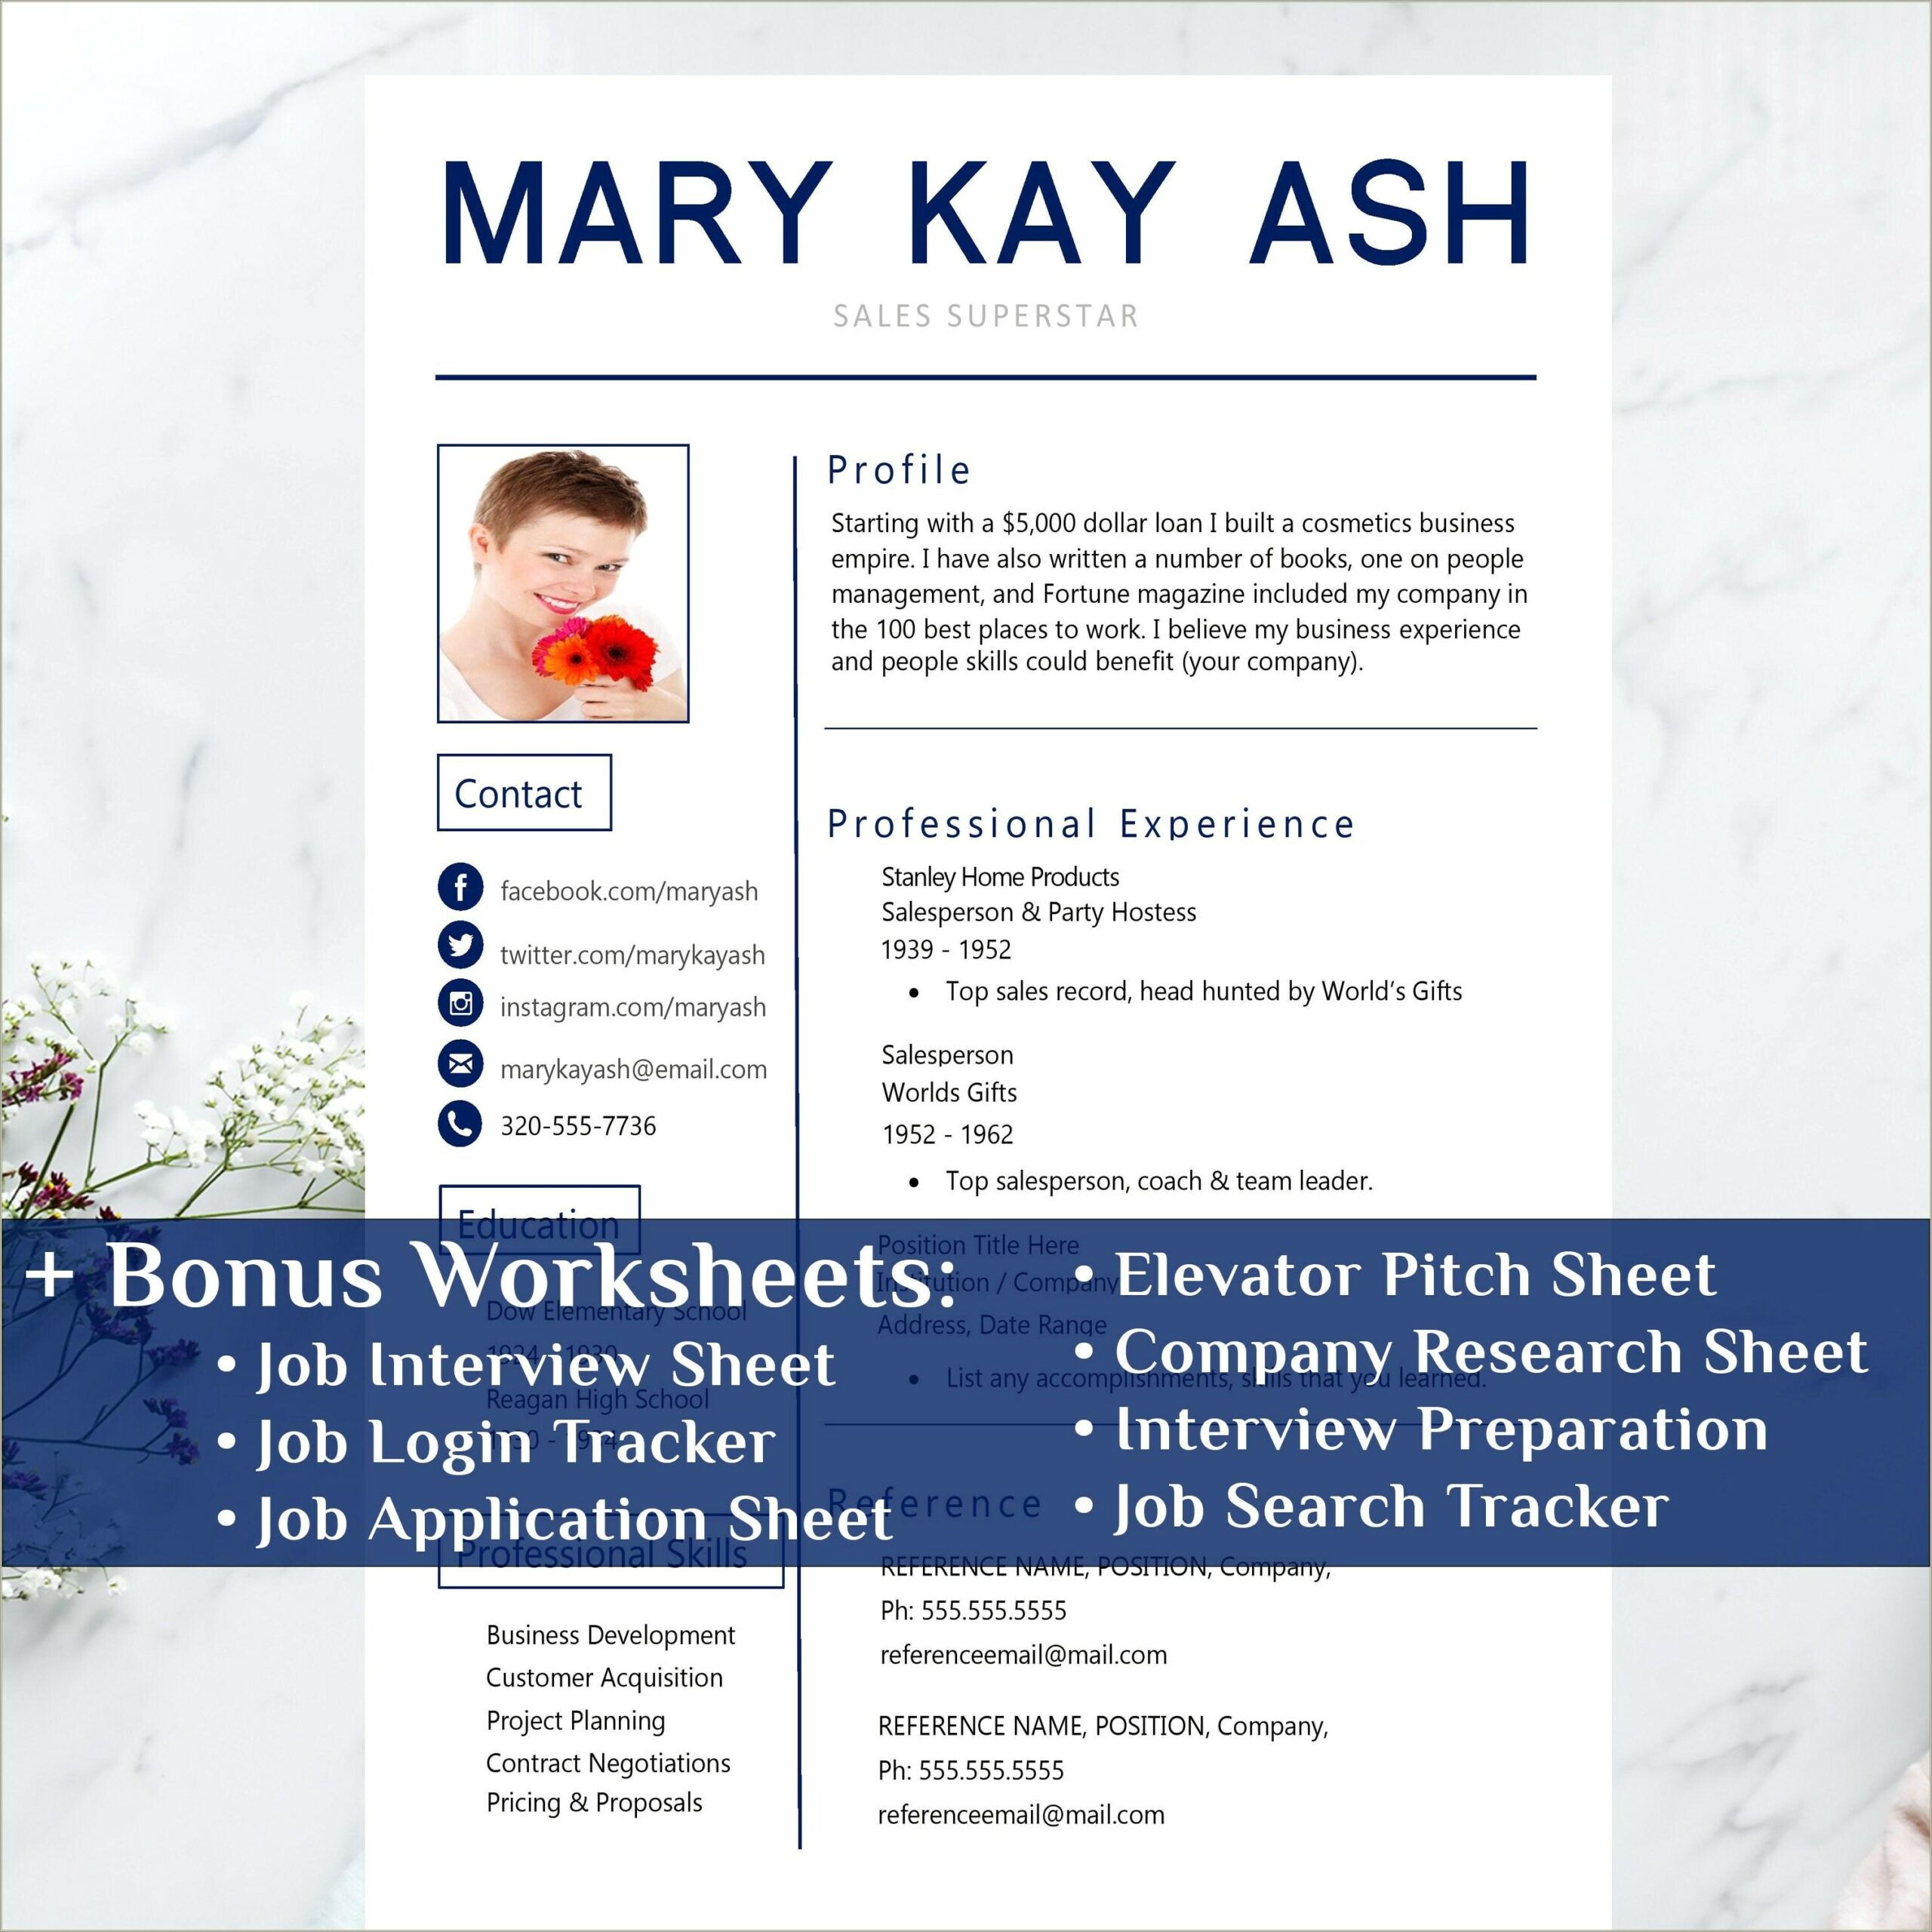 Mary Kay Job Description For Resume